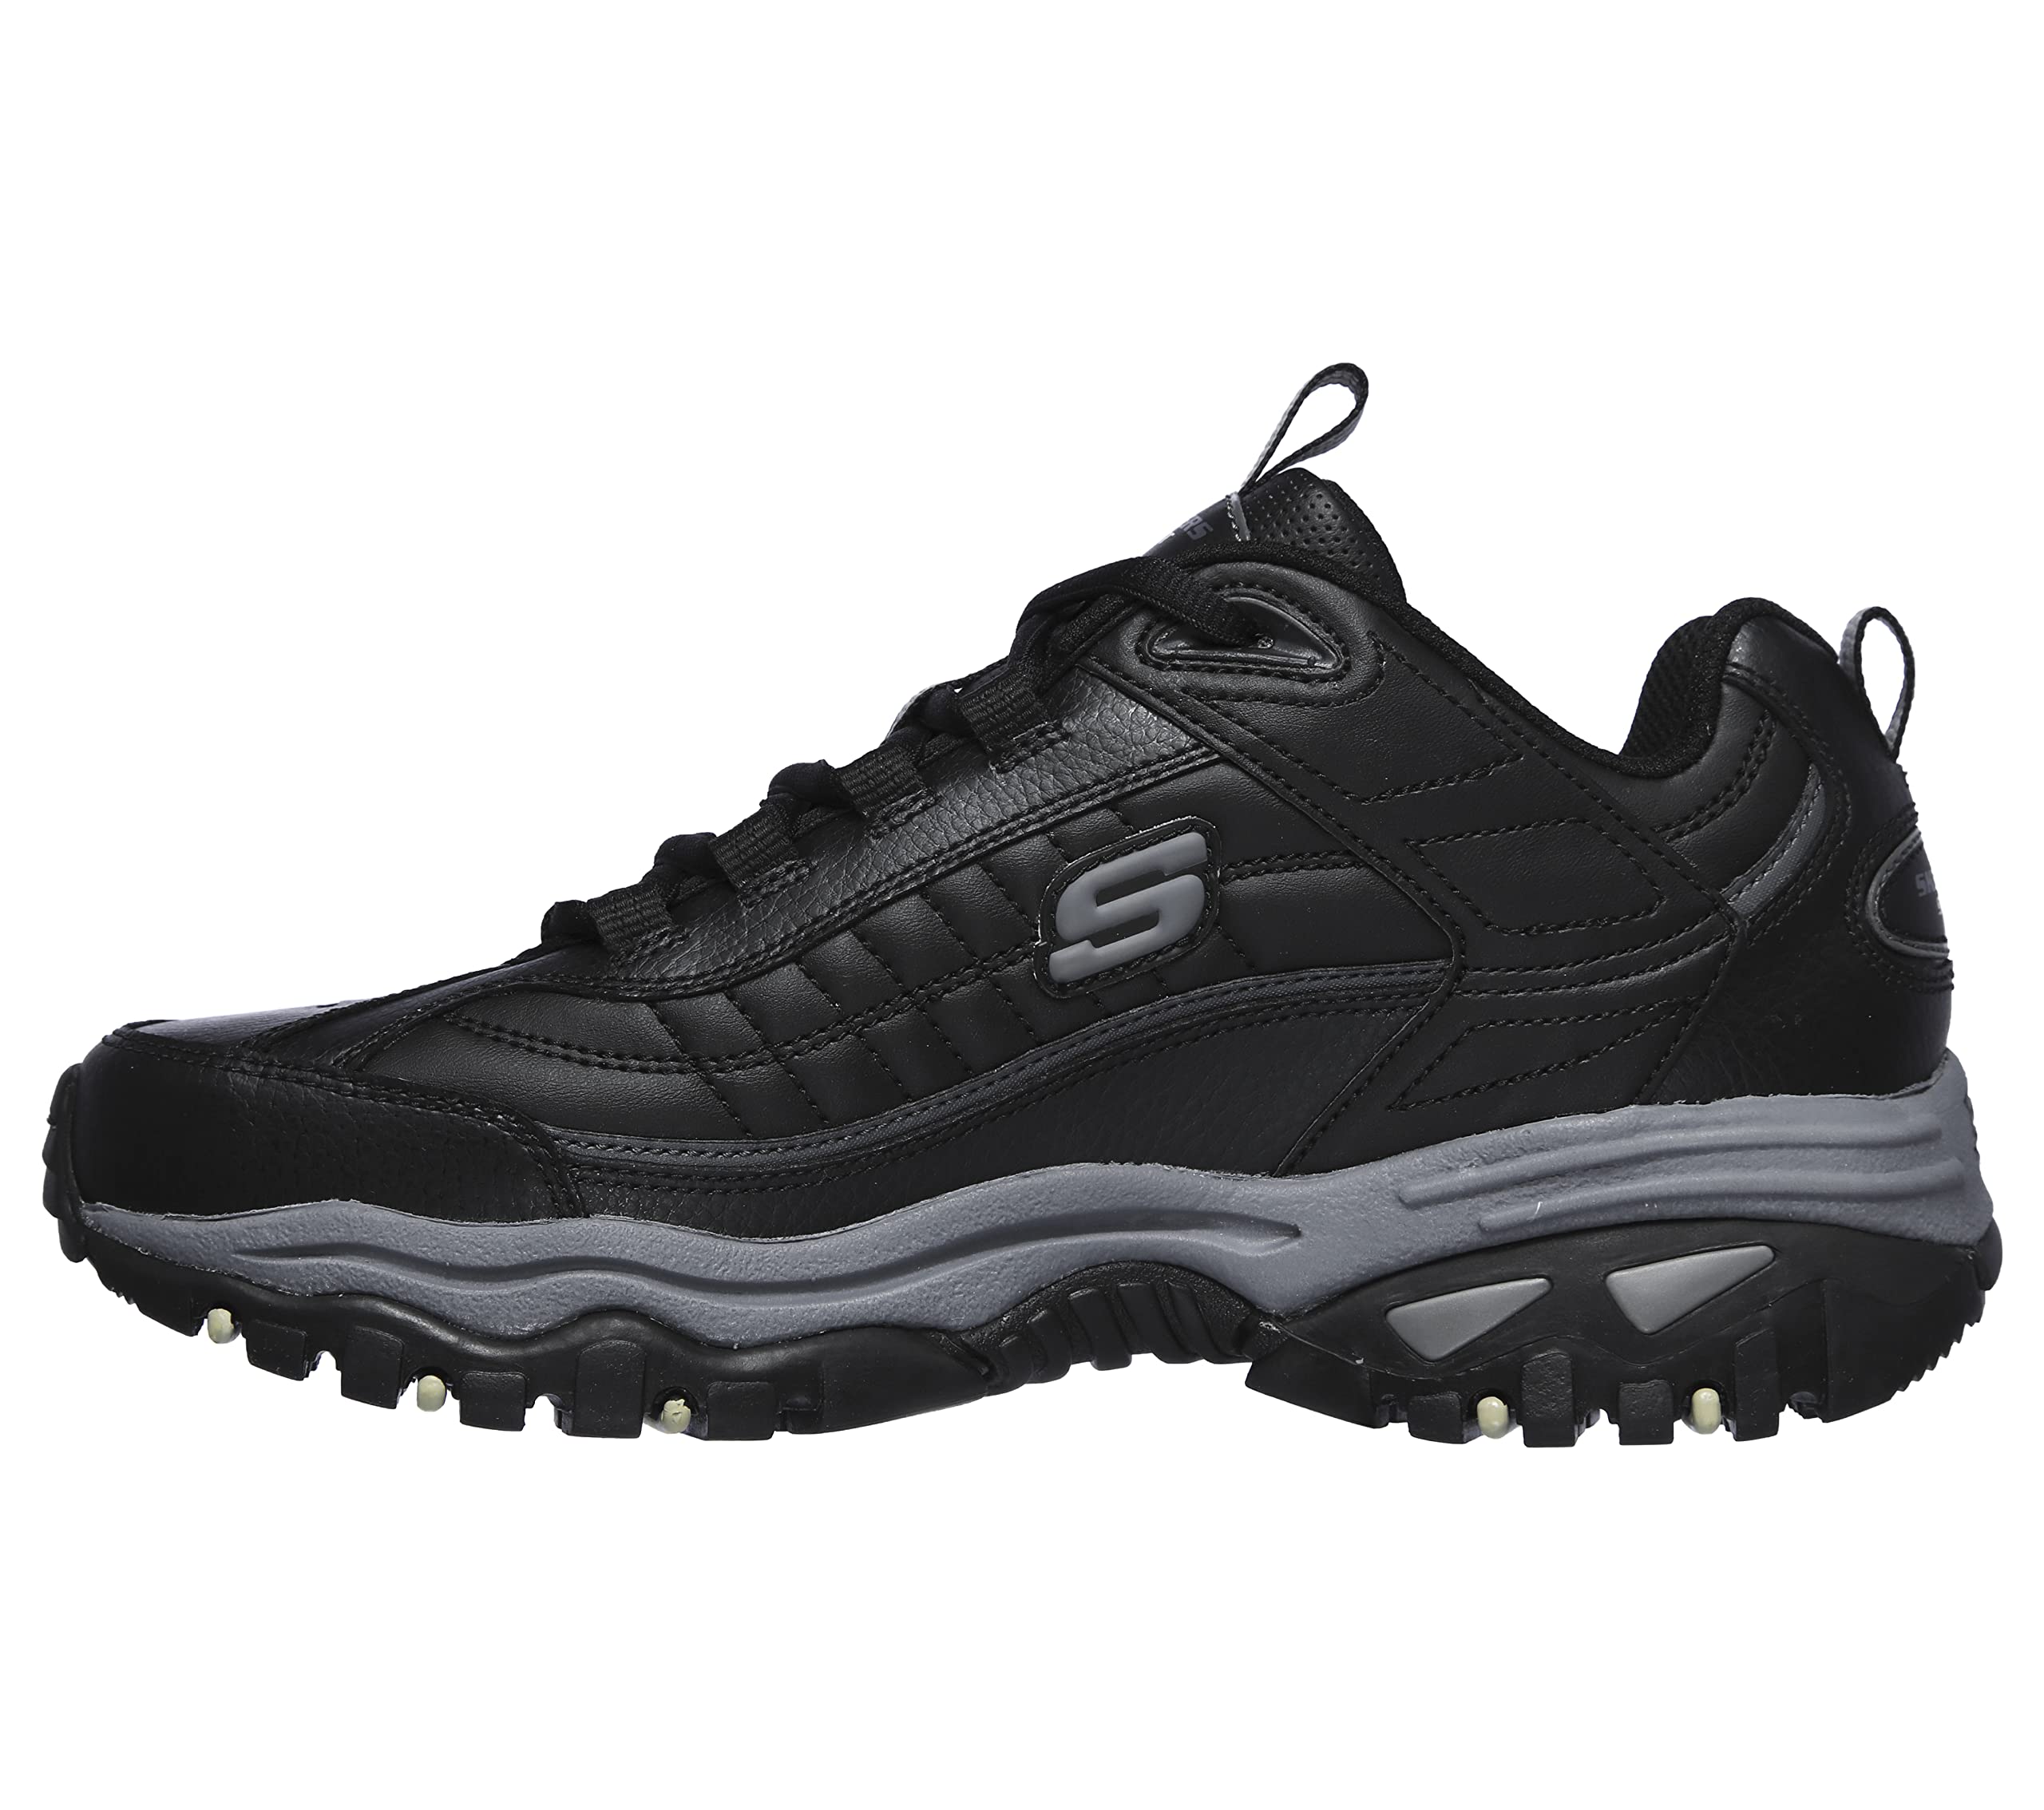 Skechers Men's Energy Afterburn Shoes Lace-Up Sneaker